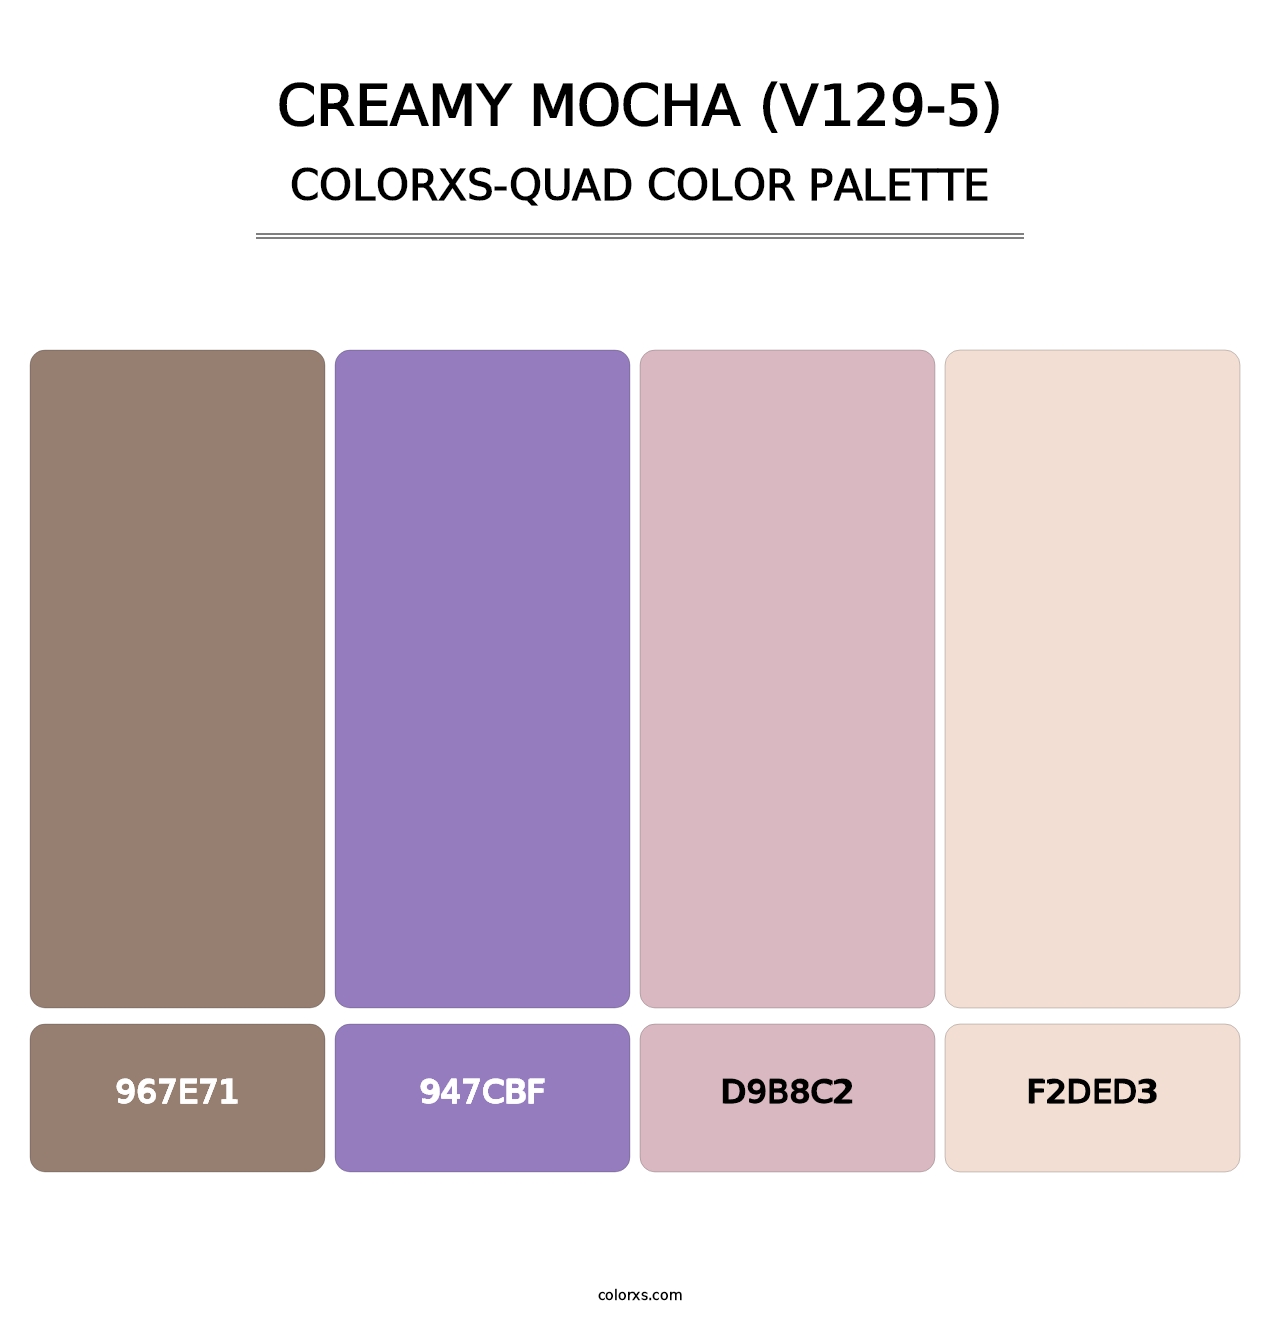 Creamy Mocha (V129-5) - Colorxs Quad Palette